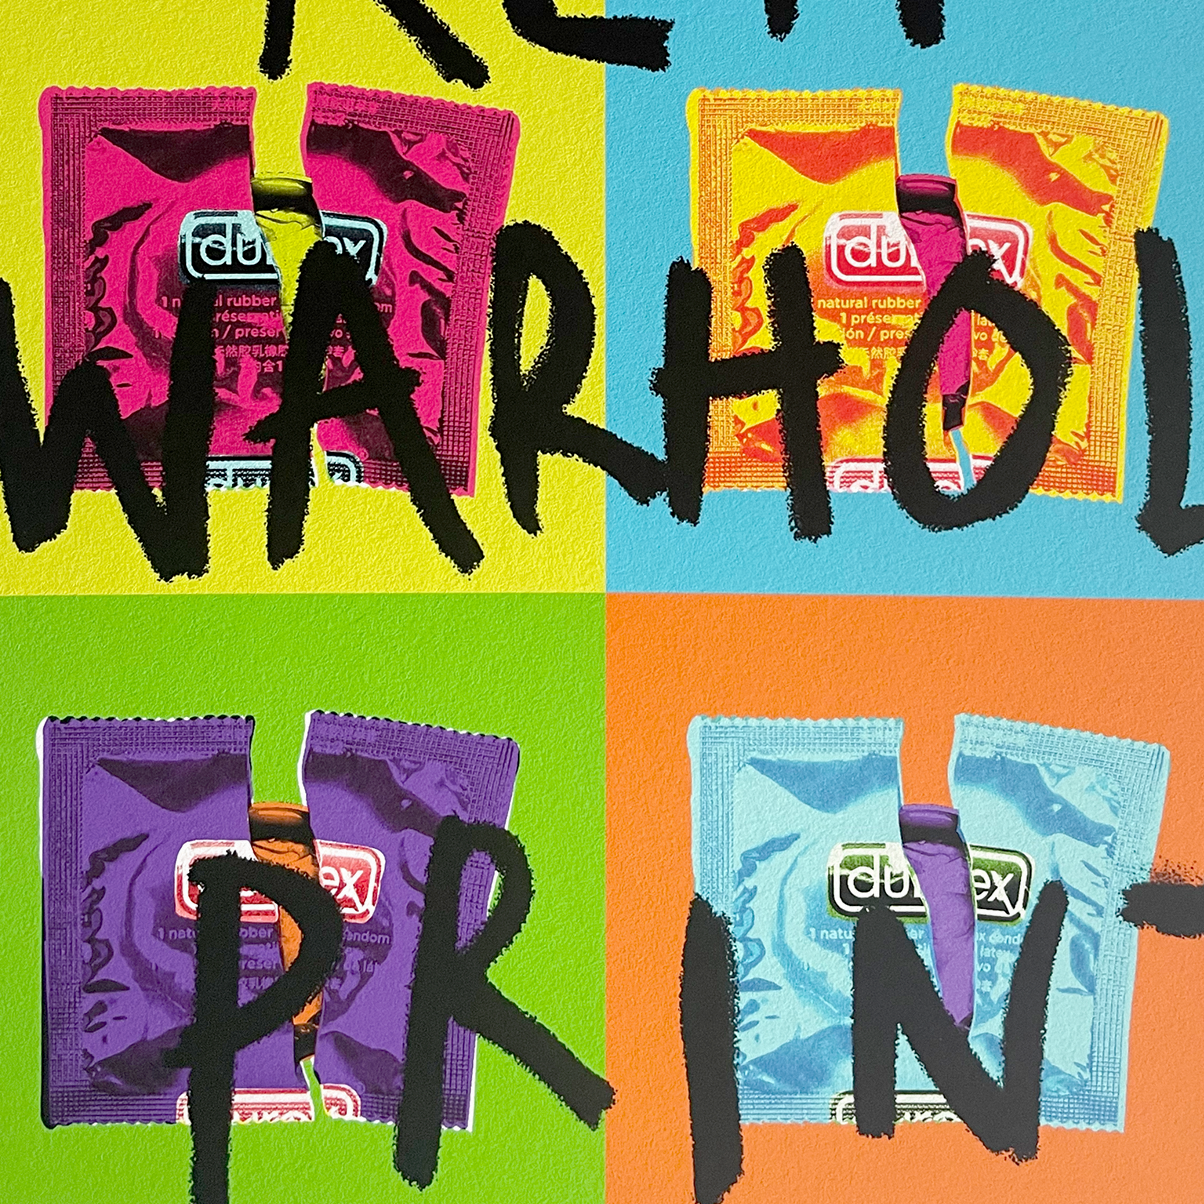 Genuine Warhol (Alternate)